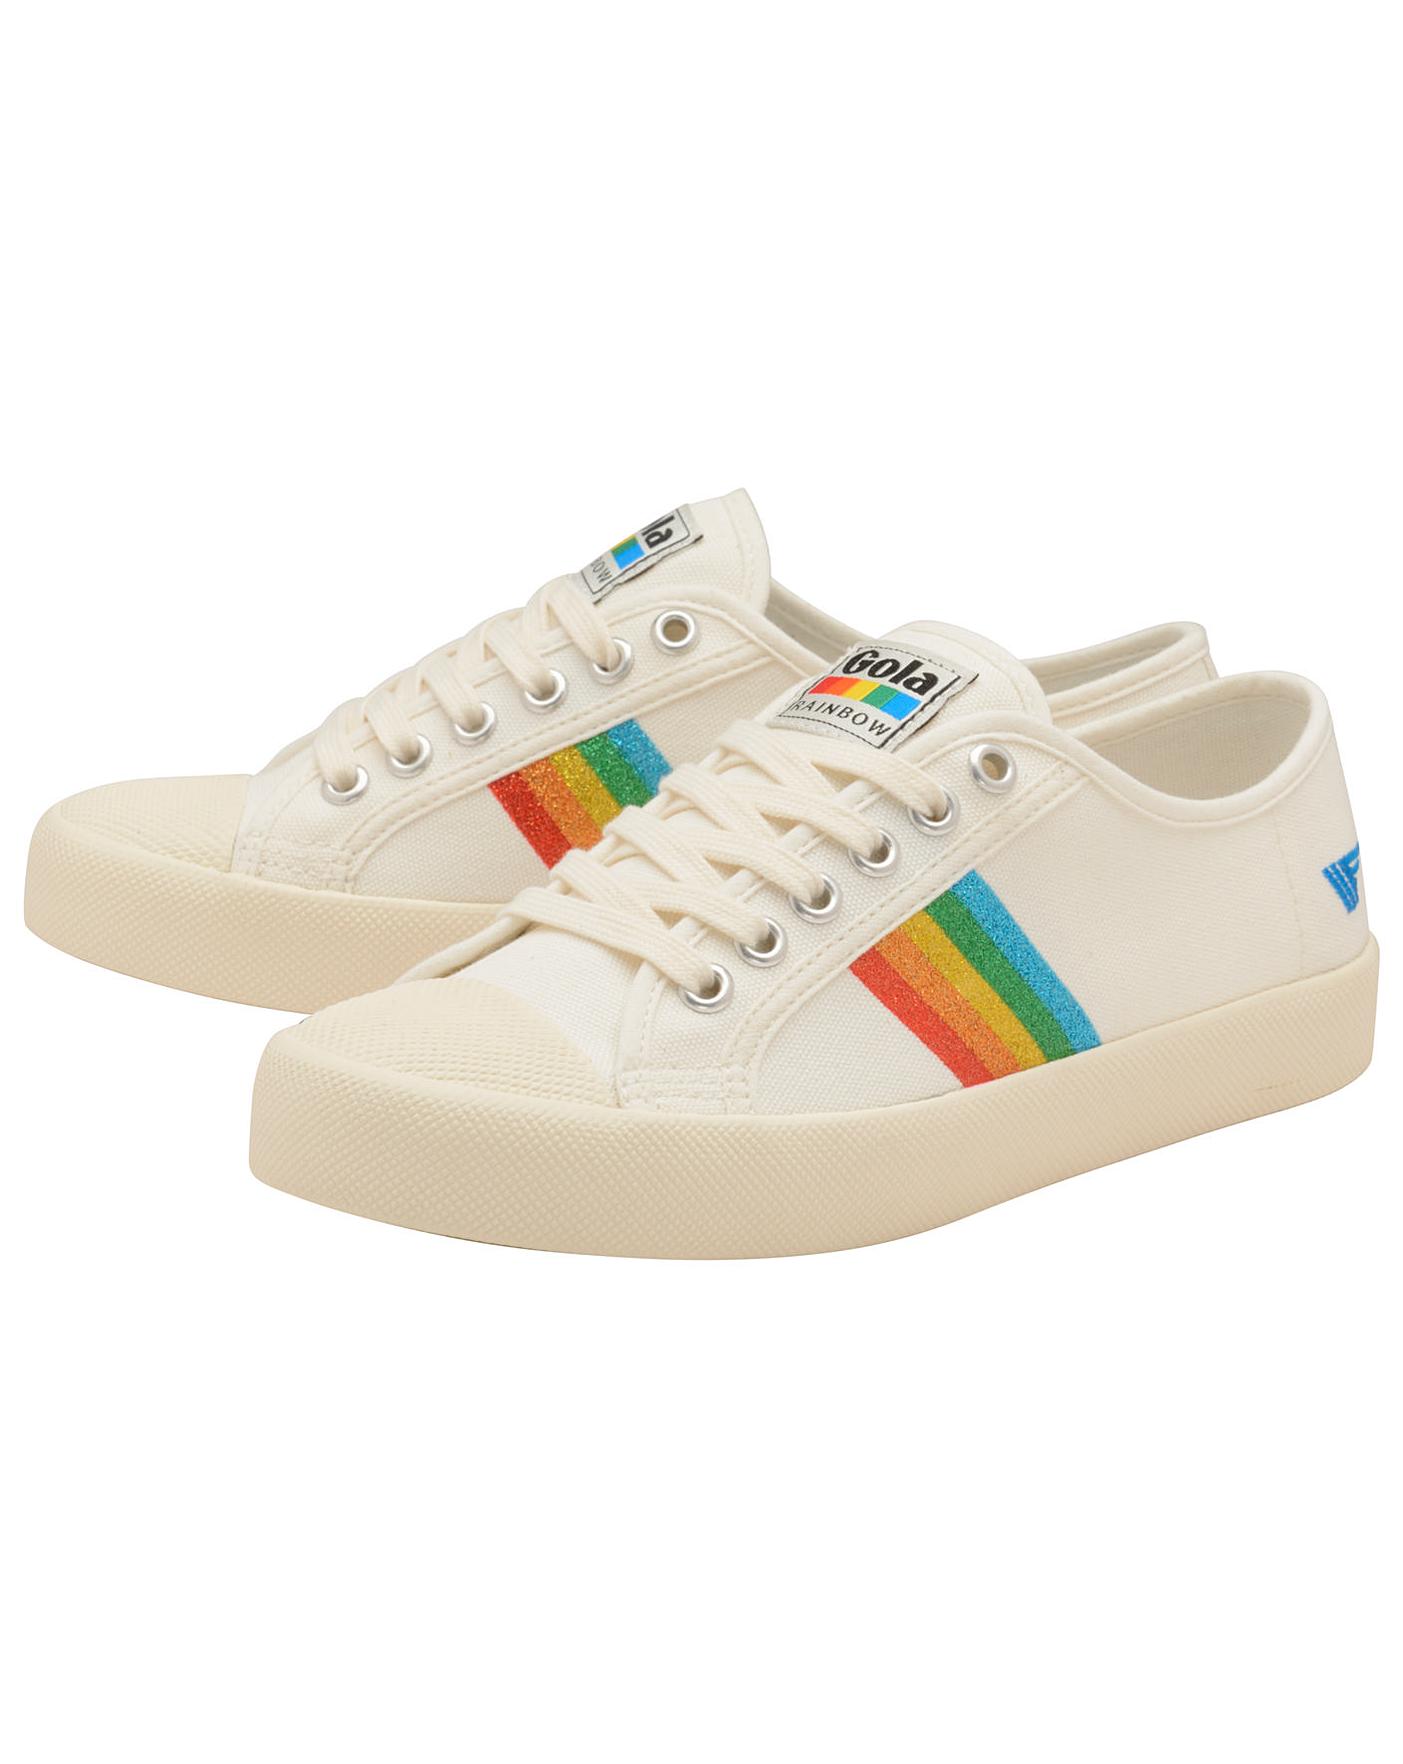 gola shoes rainbow